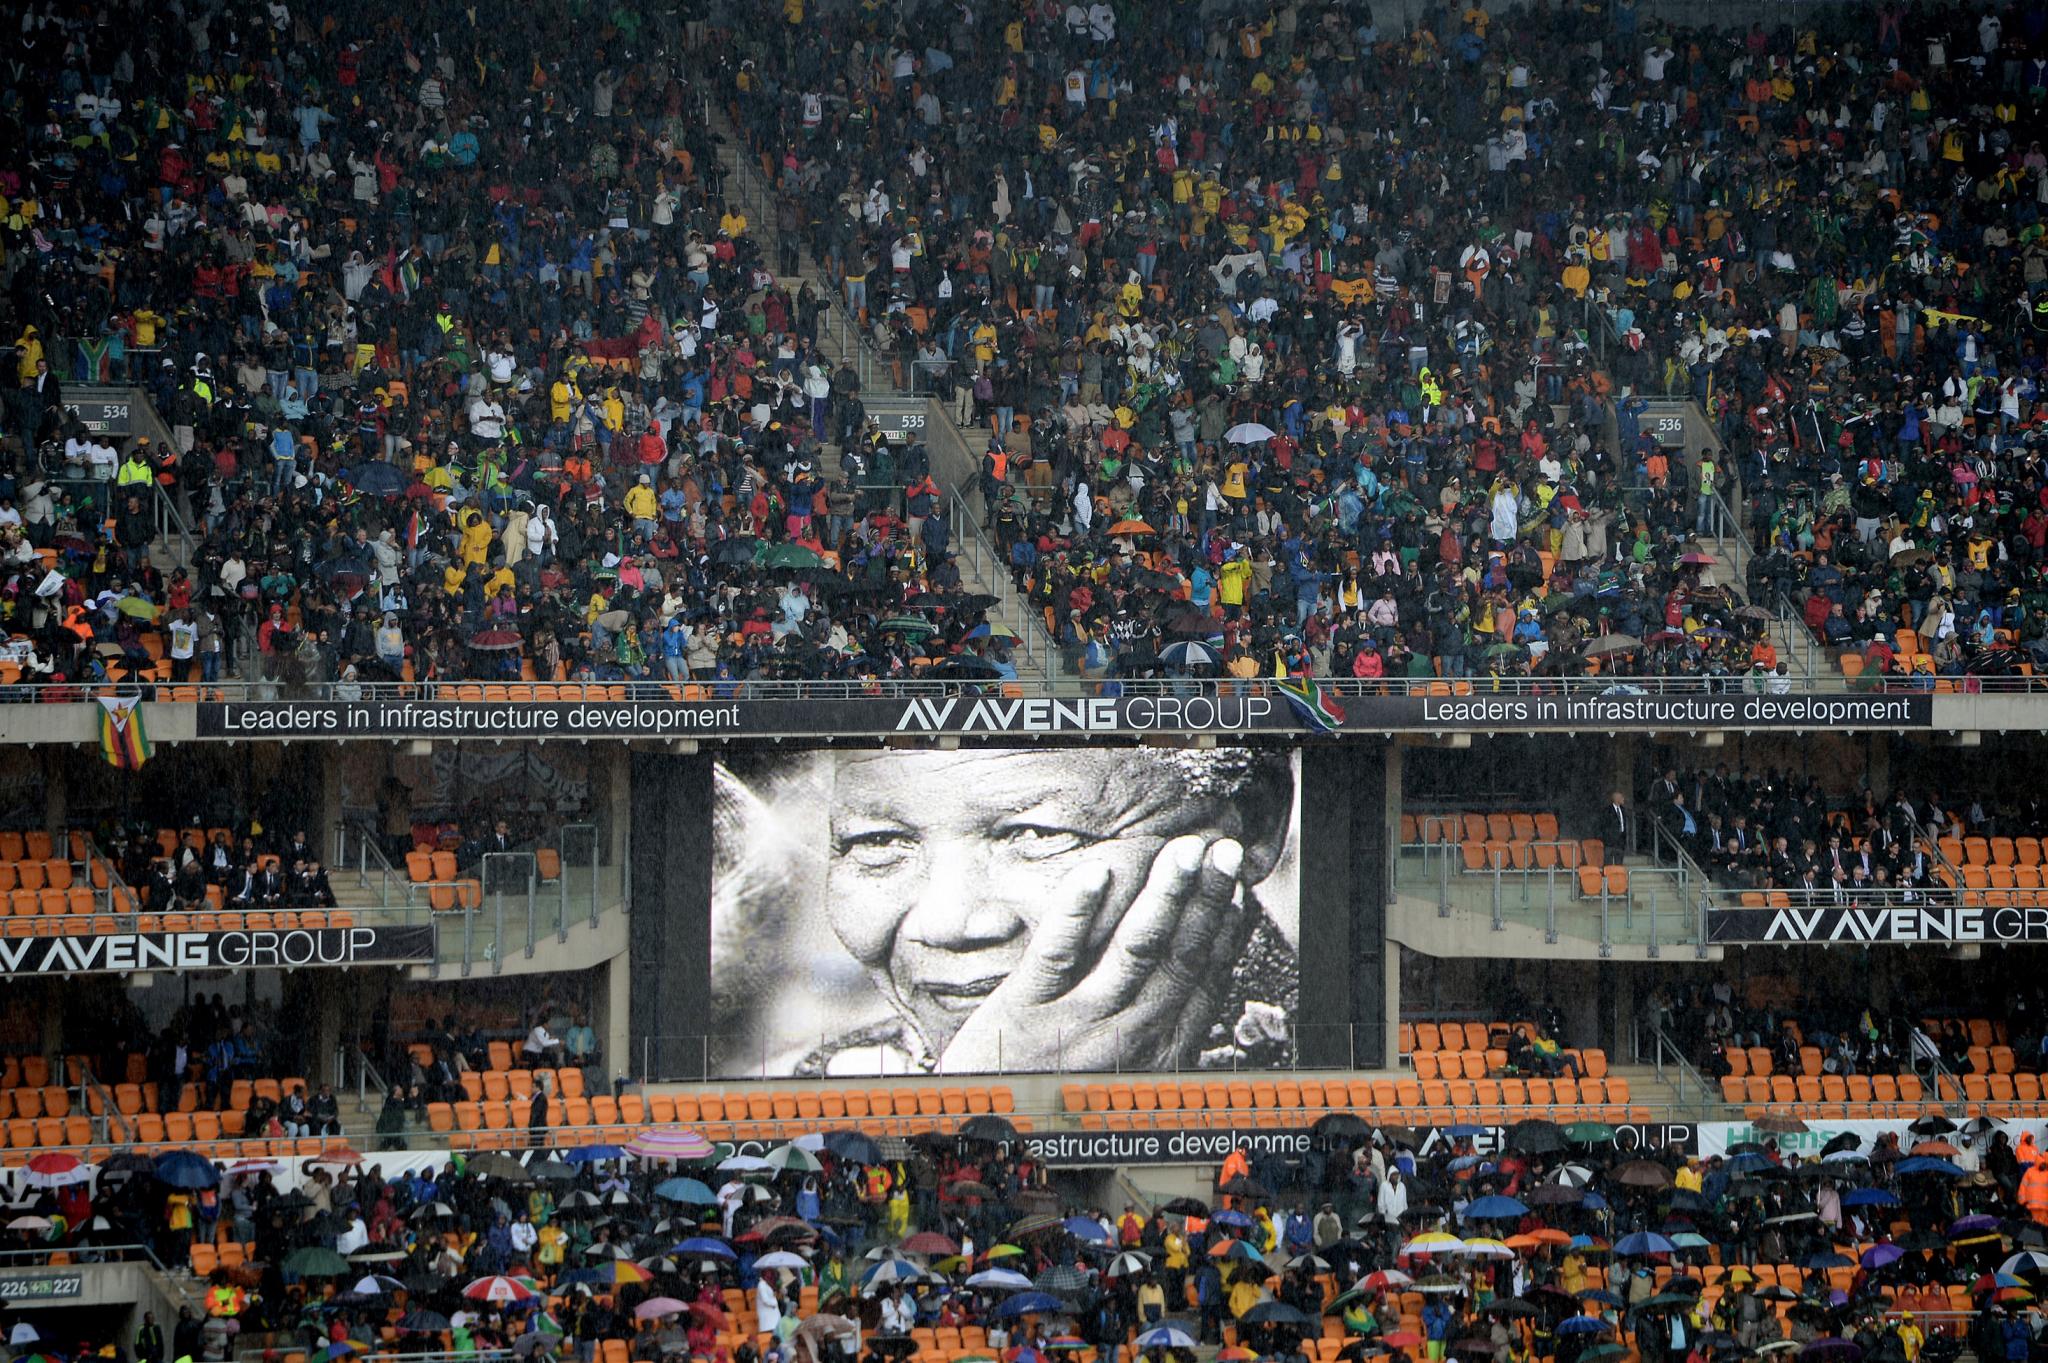 PHOTOS: South Africa’s Memorial Service for Nelson Mandela